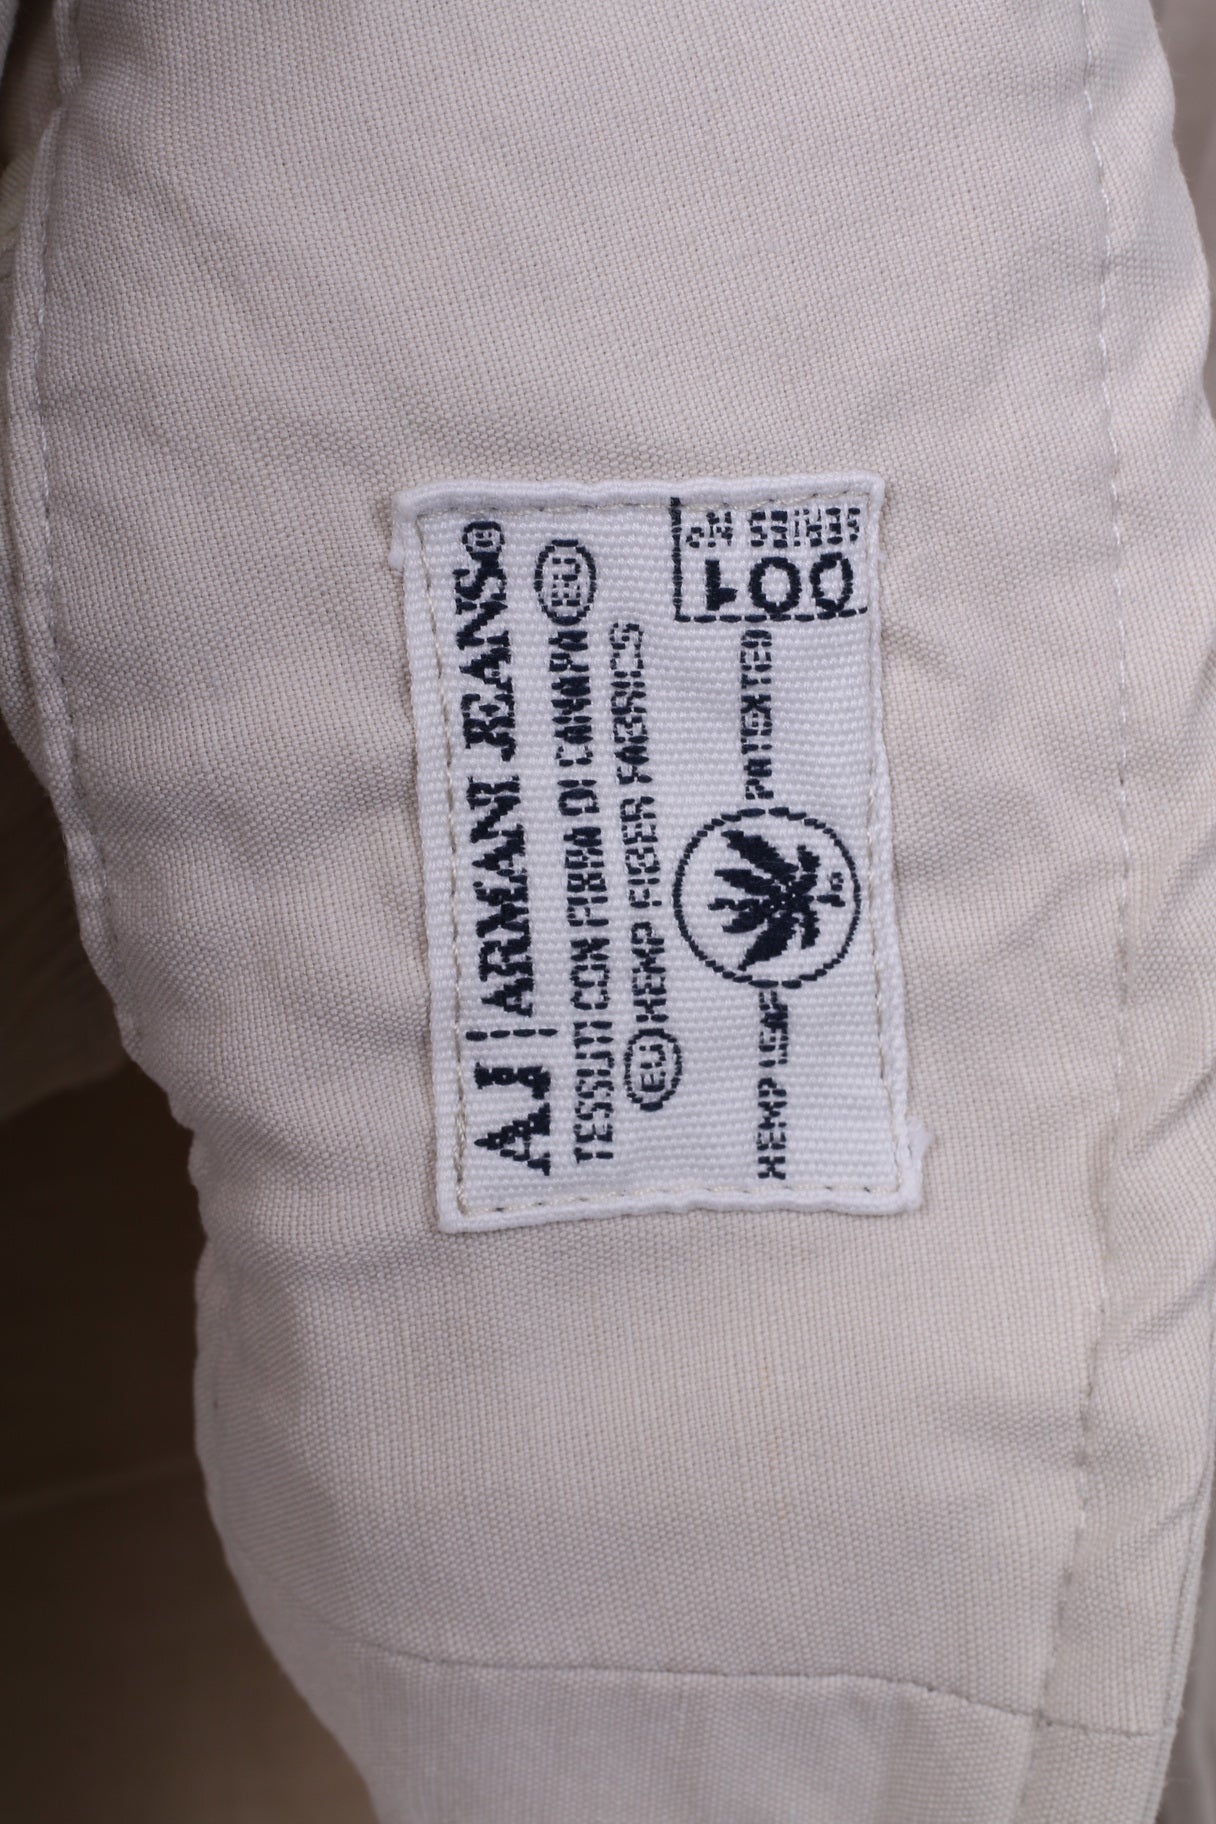 Armani Jeans Women 8 36 S Cropped Blazer Beige Viscose Italy Single Breasted Jacket